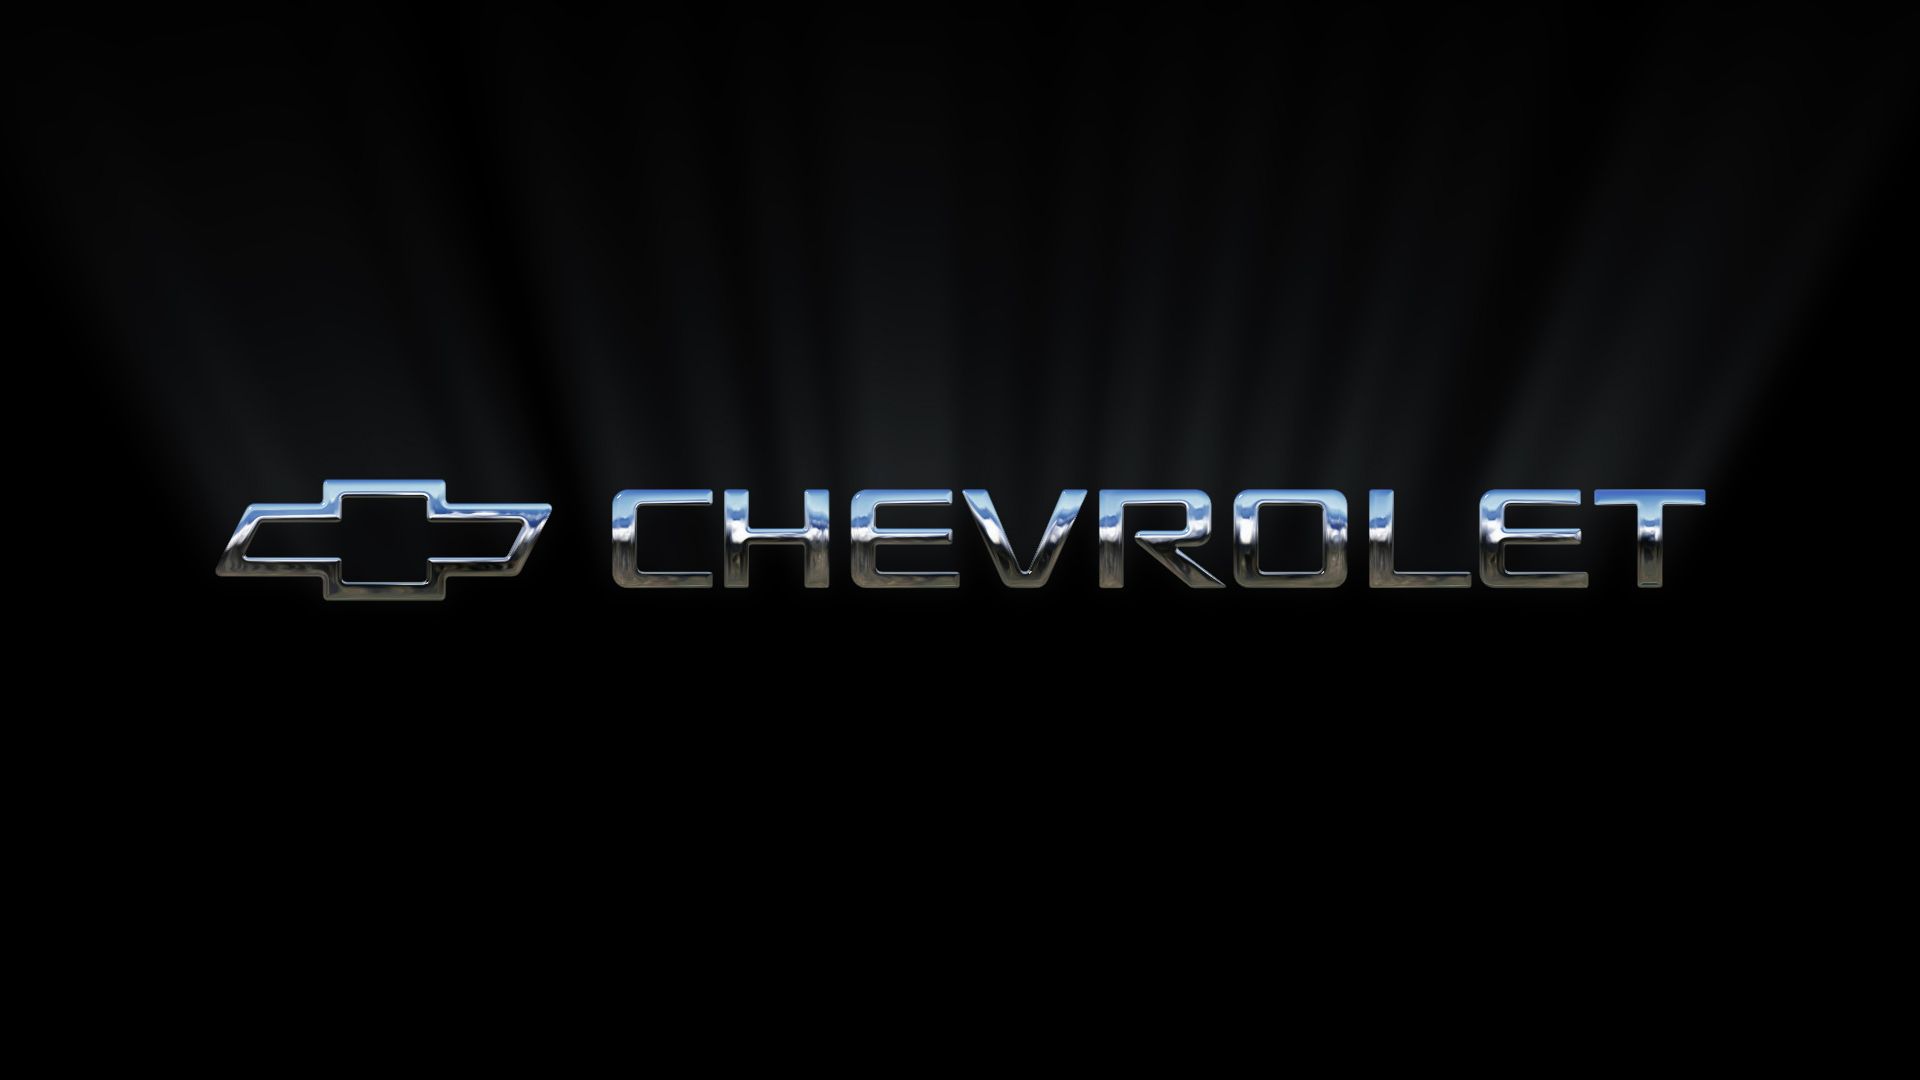 High definition image of Chevrolet emblem, wallpaper of logo, 1920×1080 px